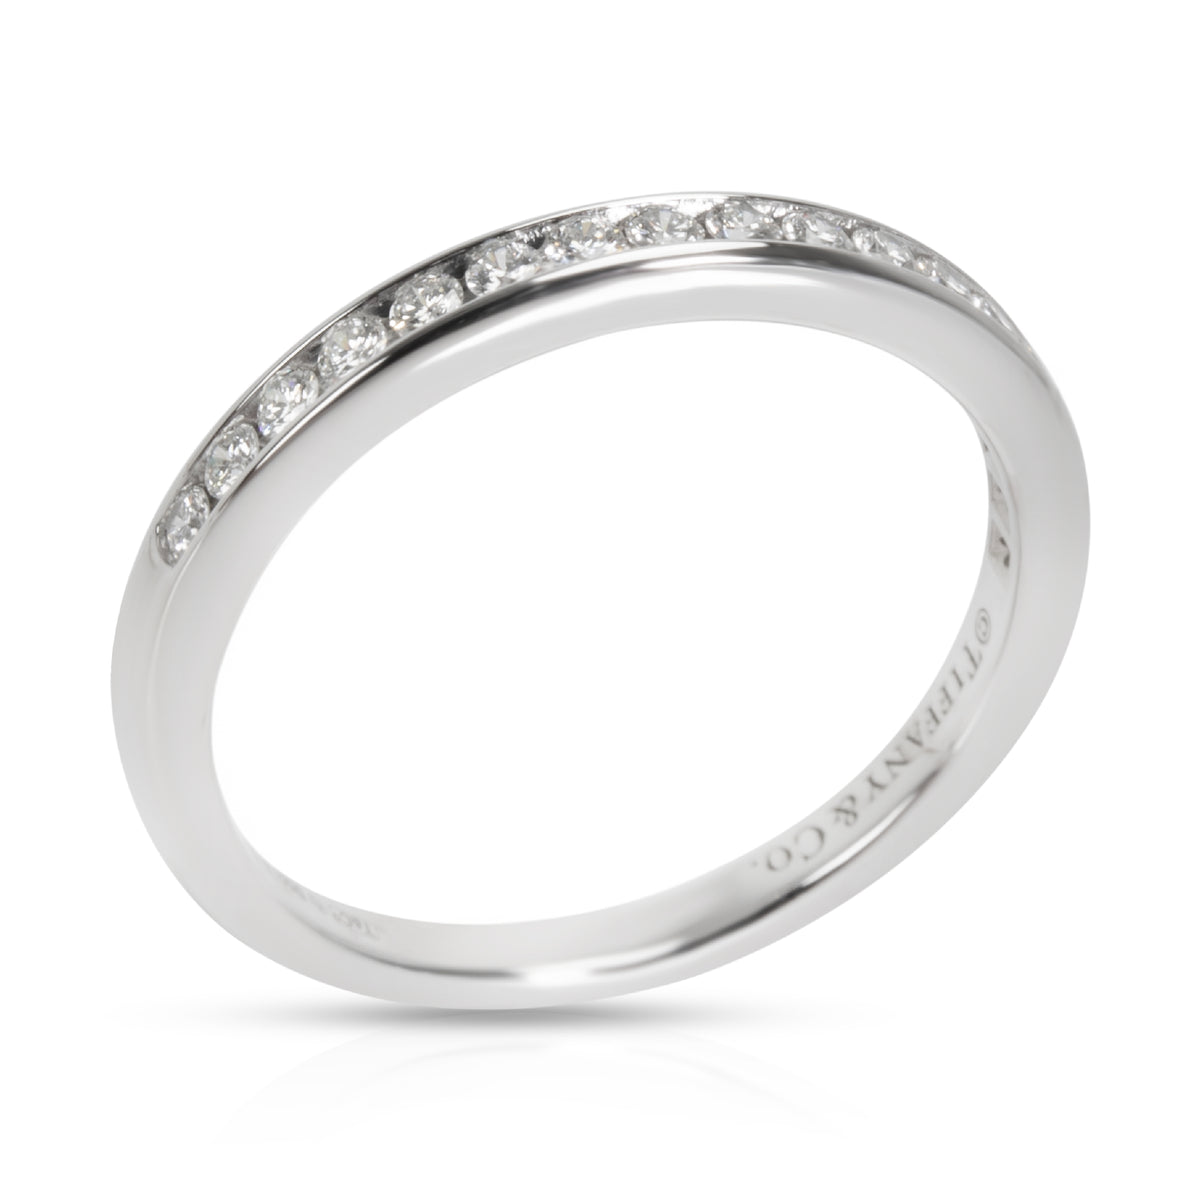 Tiffany & Co. Channel Set Diamond Wedding Band in Platinum (0.17 CTW)